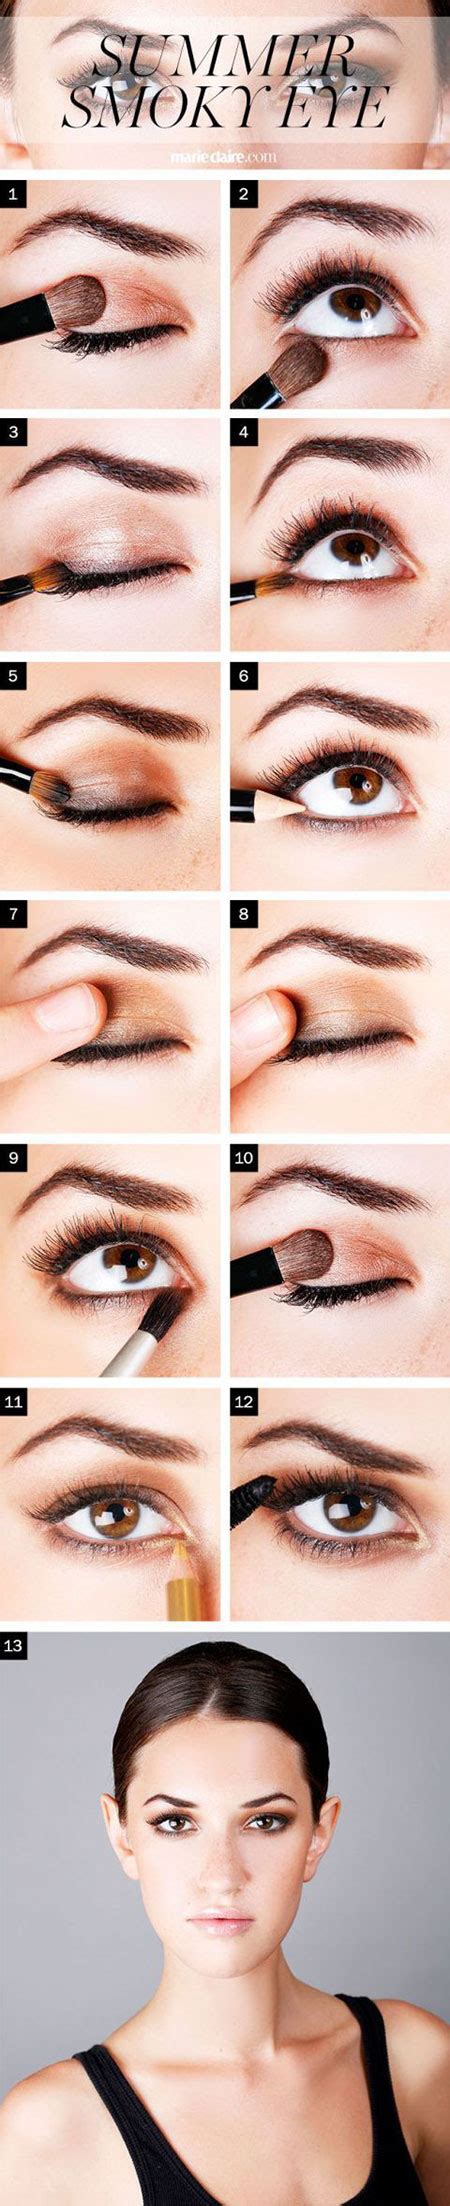 15 easy step by step valentine's day make up tutorials for beginners 10 step-by-step valentine's day makeup tutorials for beginners